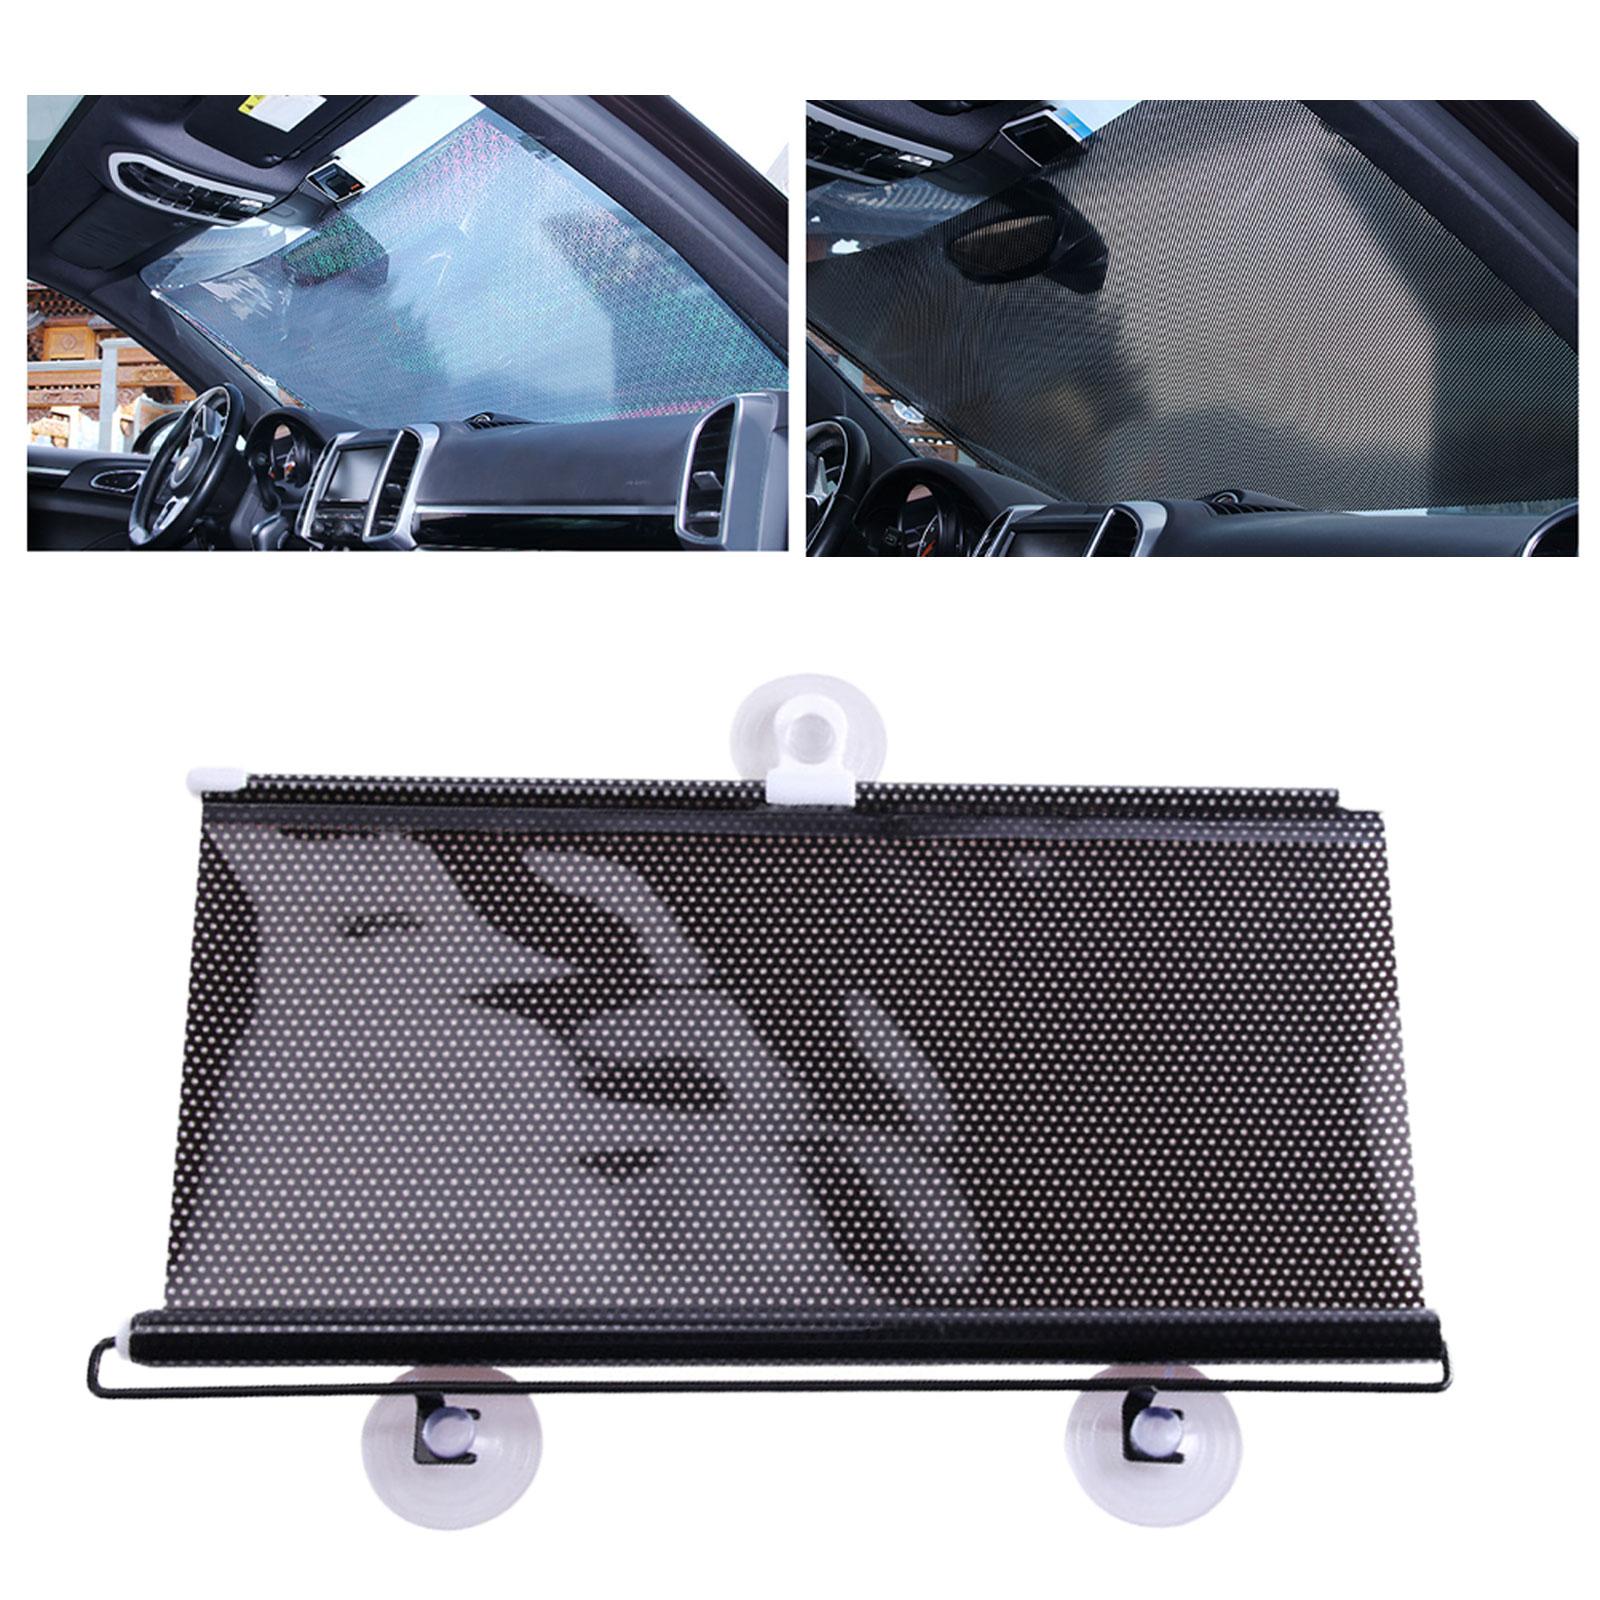 Car Windshield Sunshade Block UV Rays Car Shade for Most Cars, Vehicles 40cmx125cm